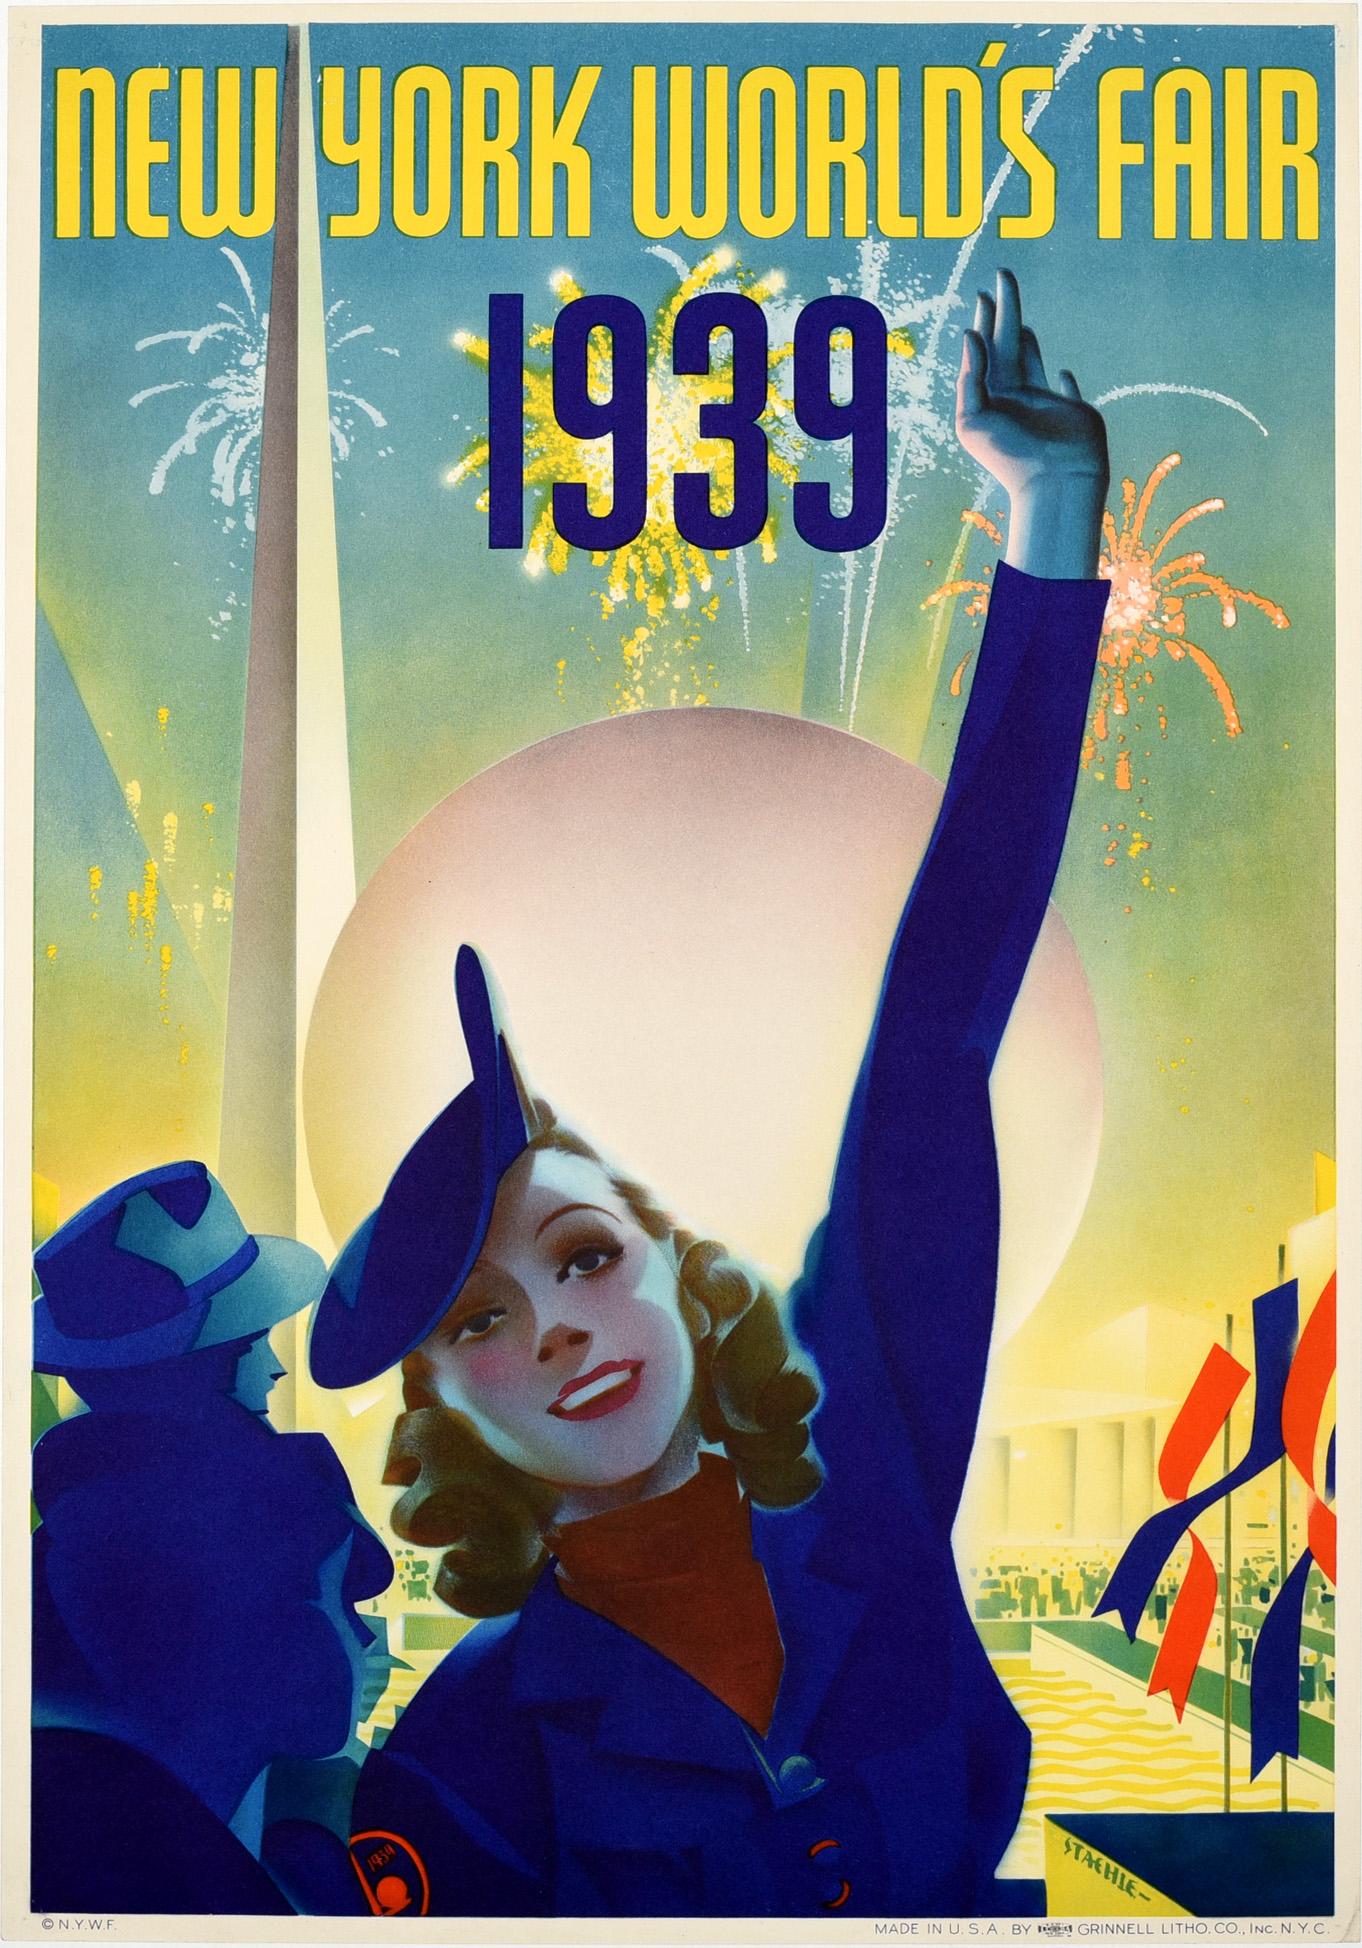 Albert Staehle Print - Original Vintage Poster New York World's Fair 1939 Modernist Trylon Perisphere